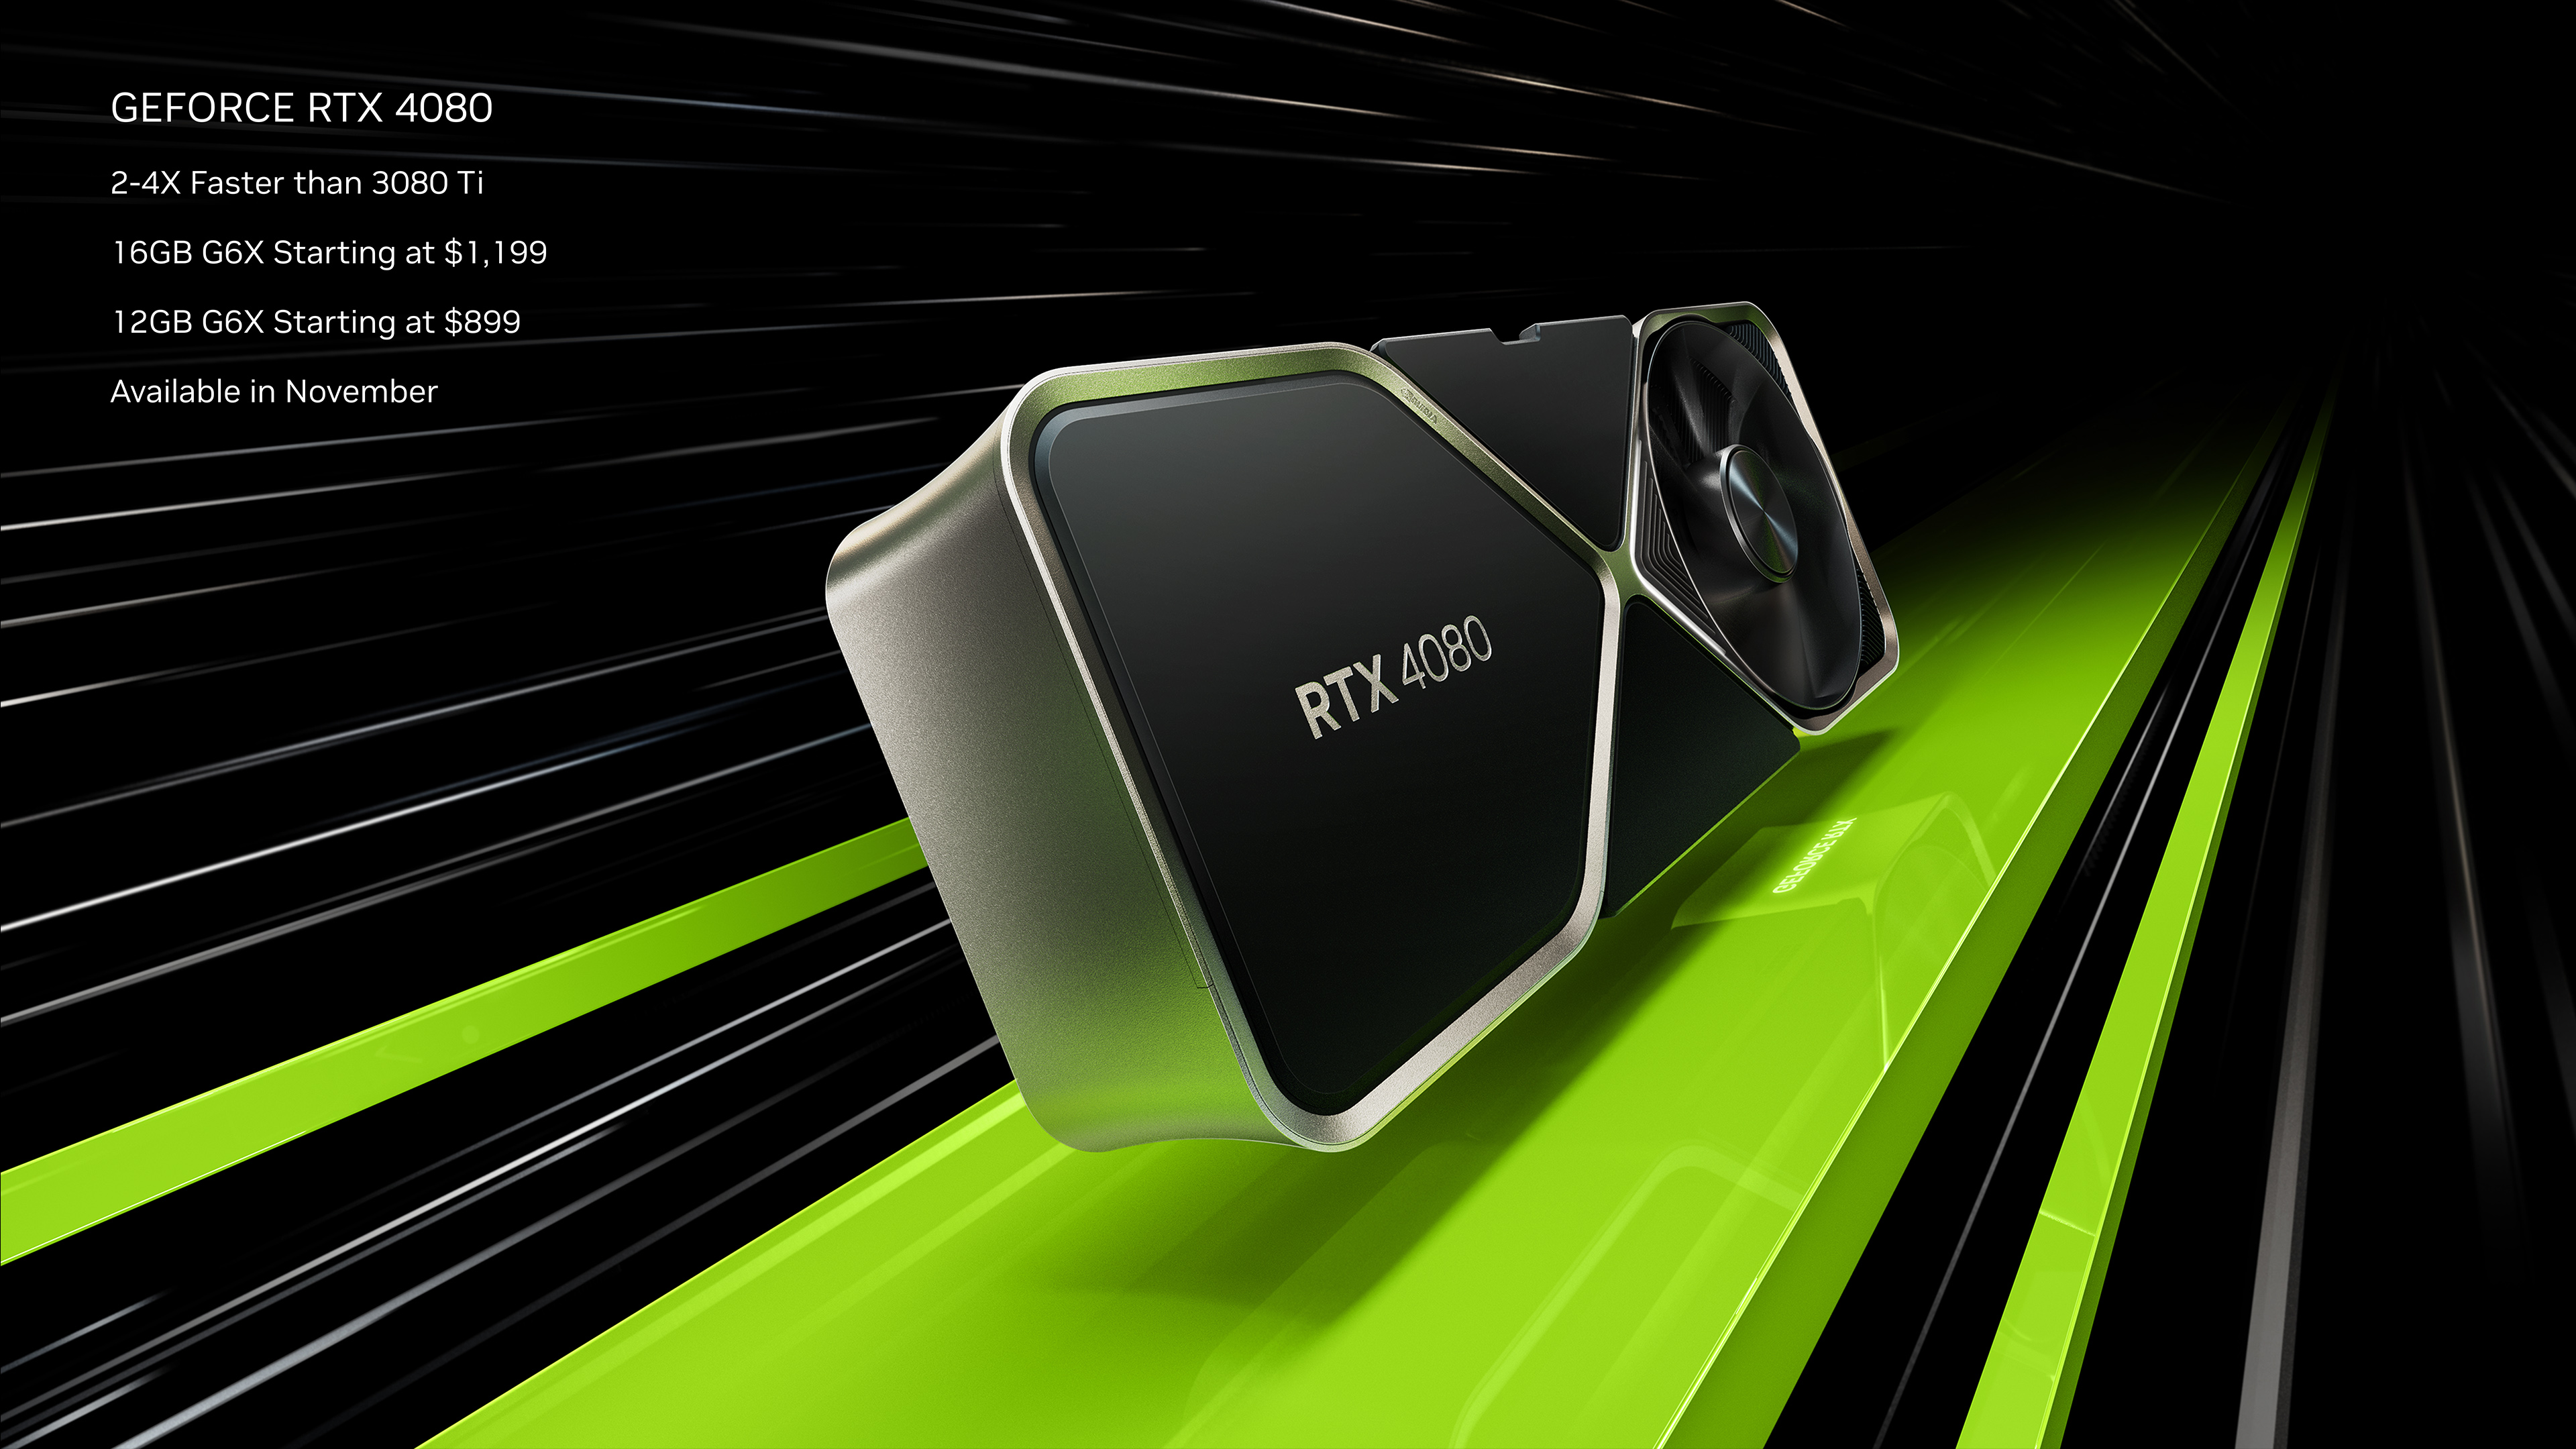 RTX 4080 Super rumors: release, specs, & price